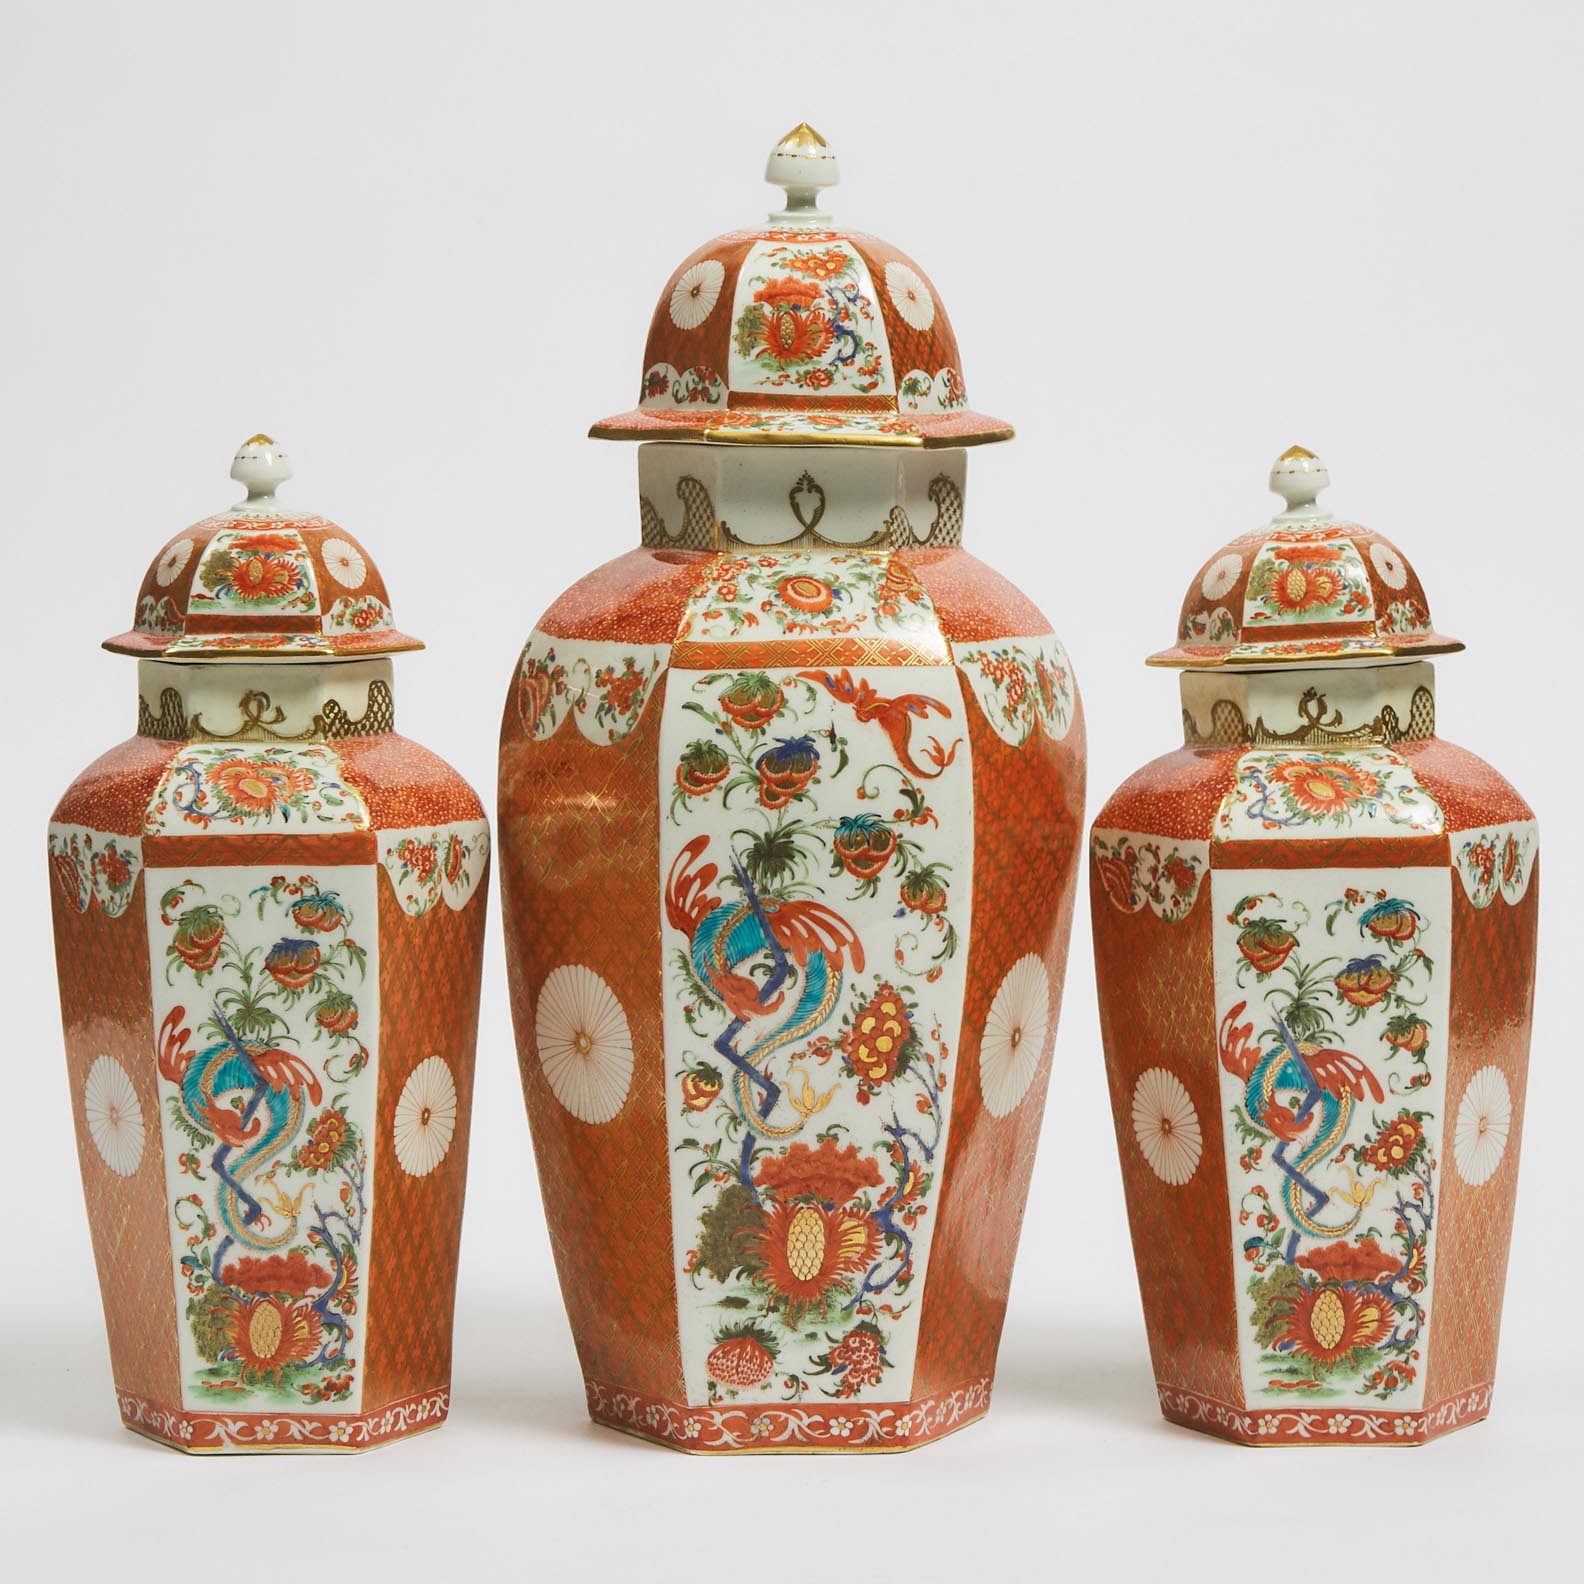 Garniture of Three Worcester Scarlet Japan Pattern Hexagonal Vases and Covers, c.1765-70